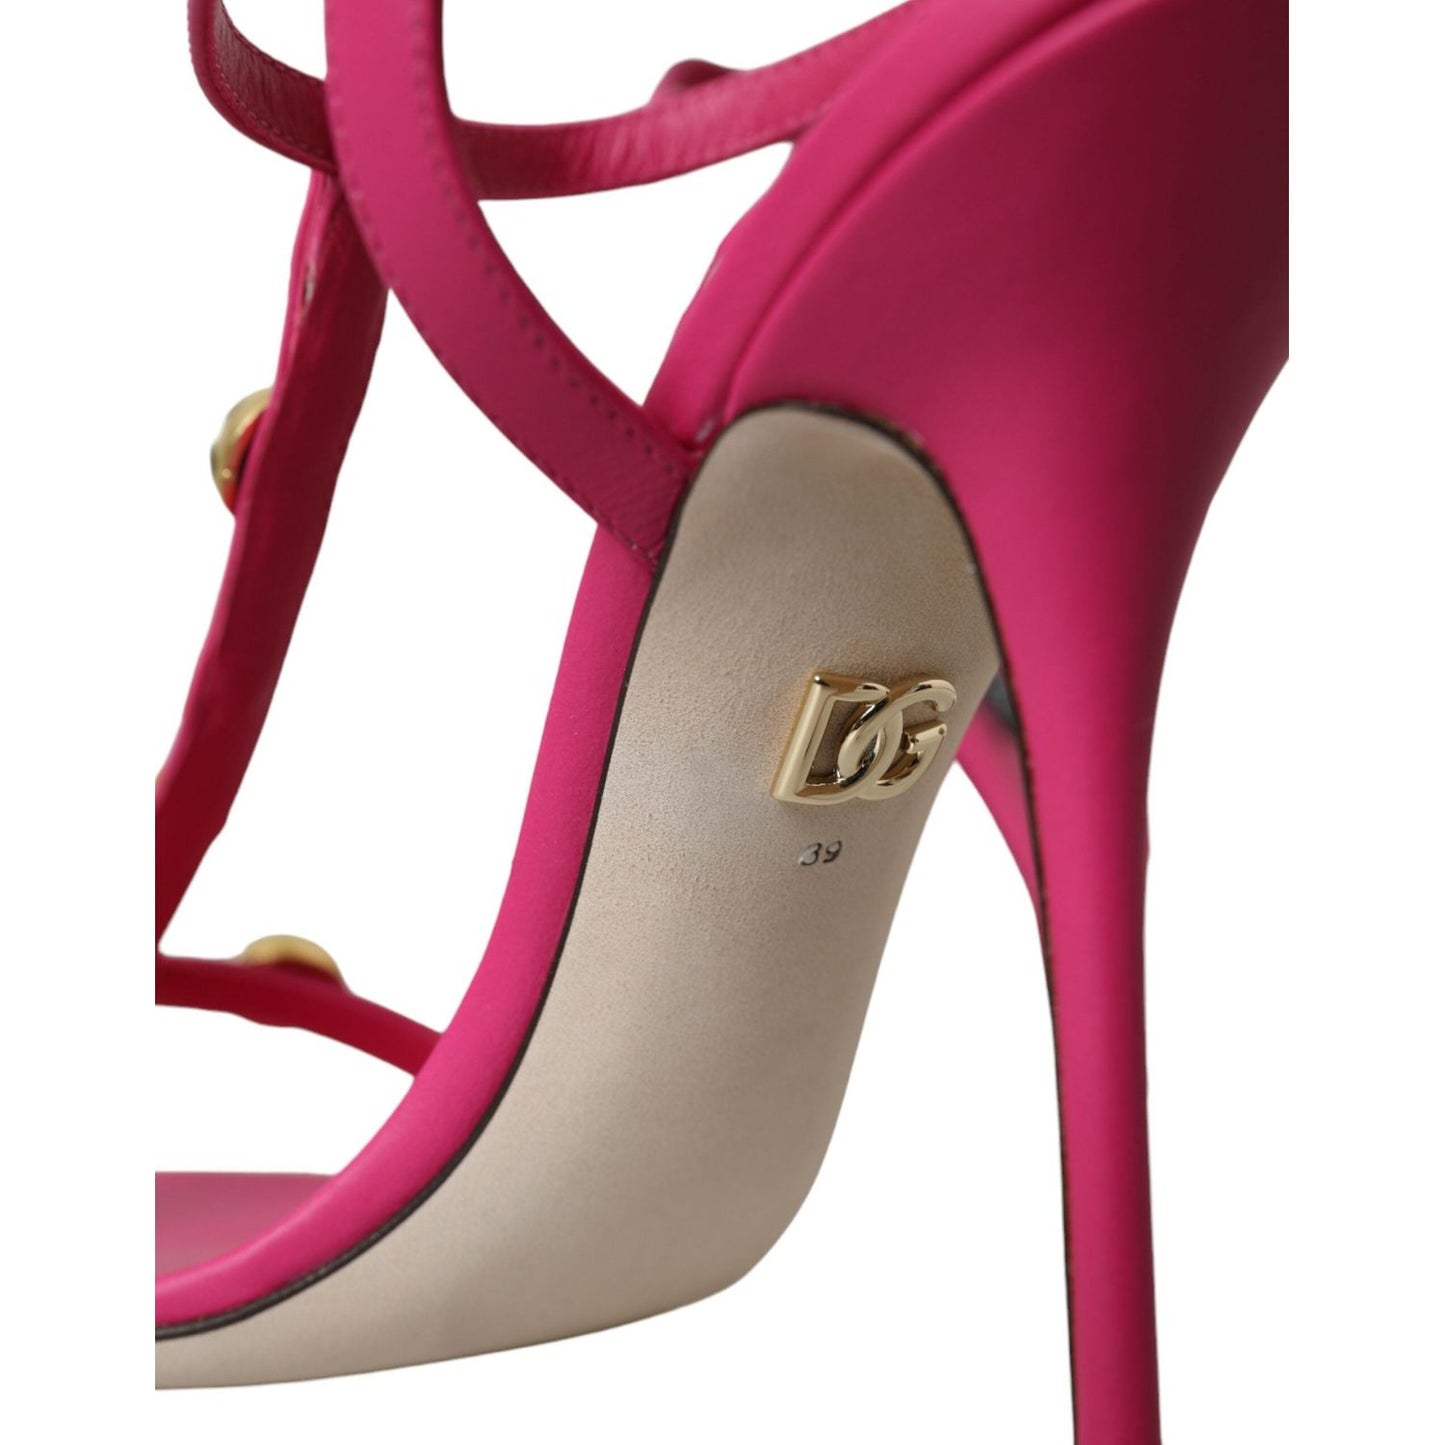 Dolce & Gabbana Pink Embellished Leather Sandals Heels Shoes pink-embellished-leather-sandals-heels-shoes